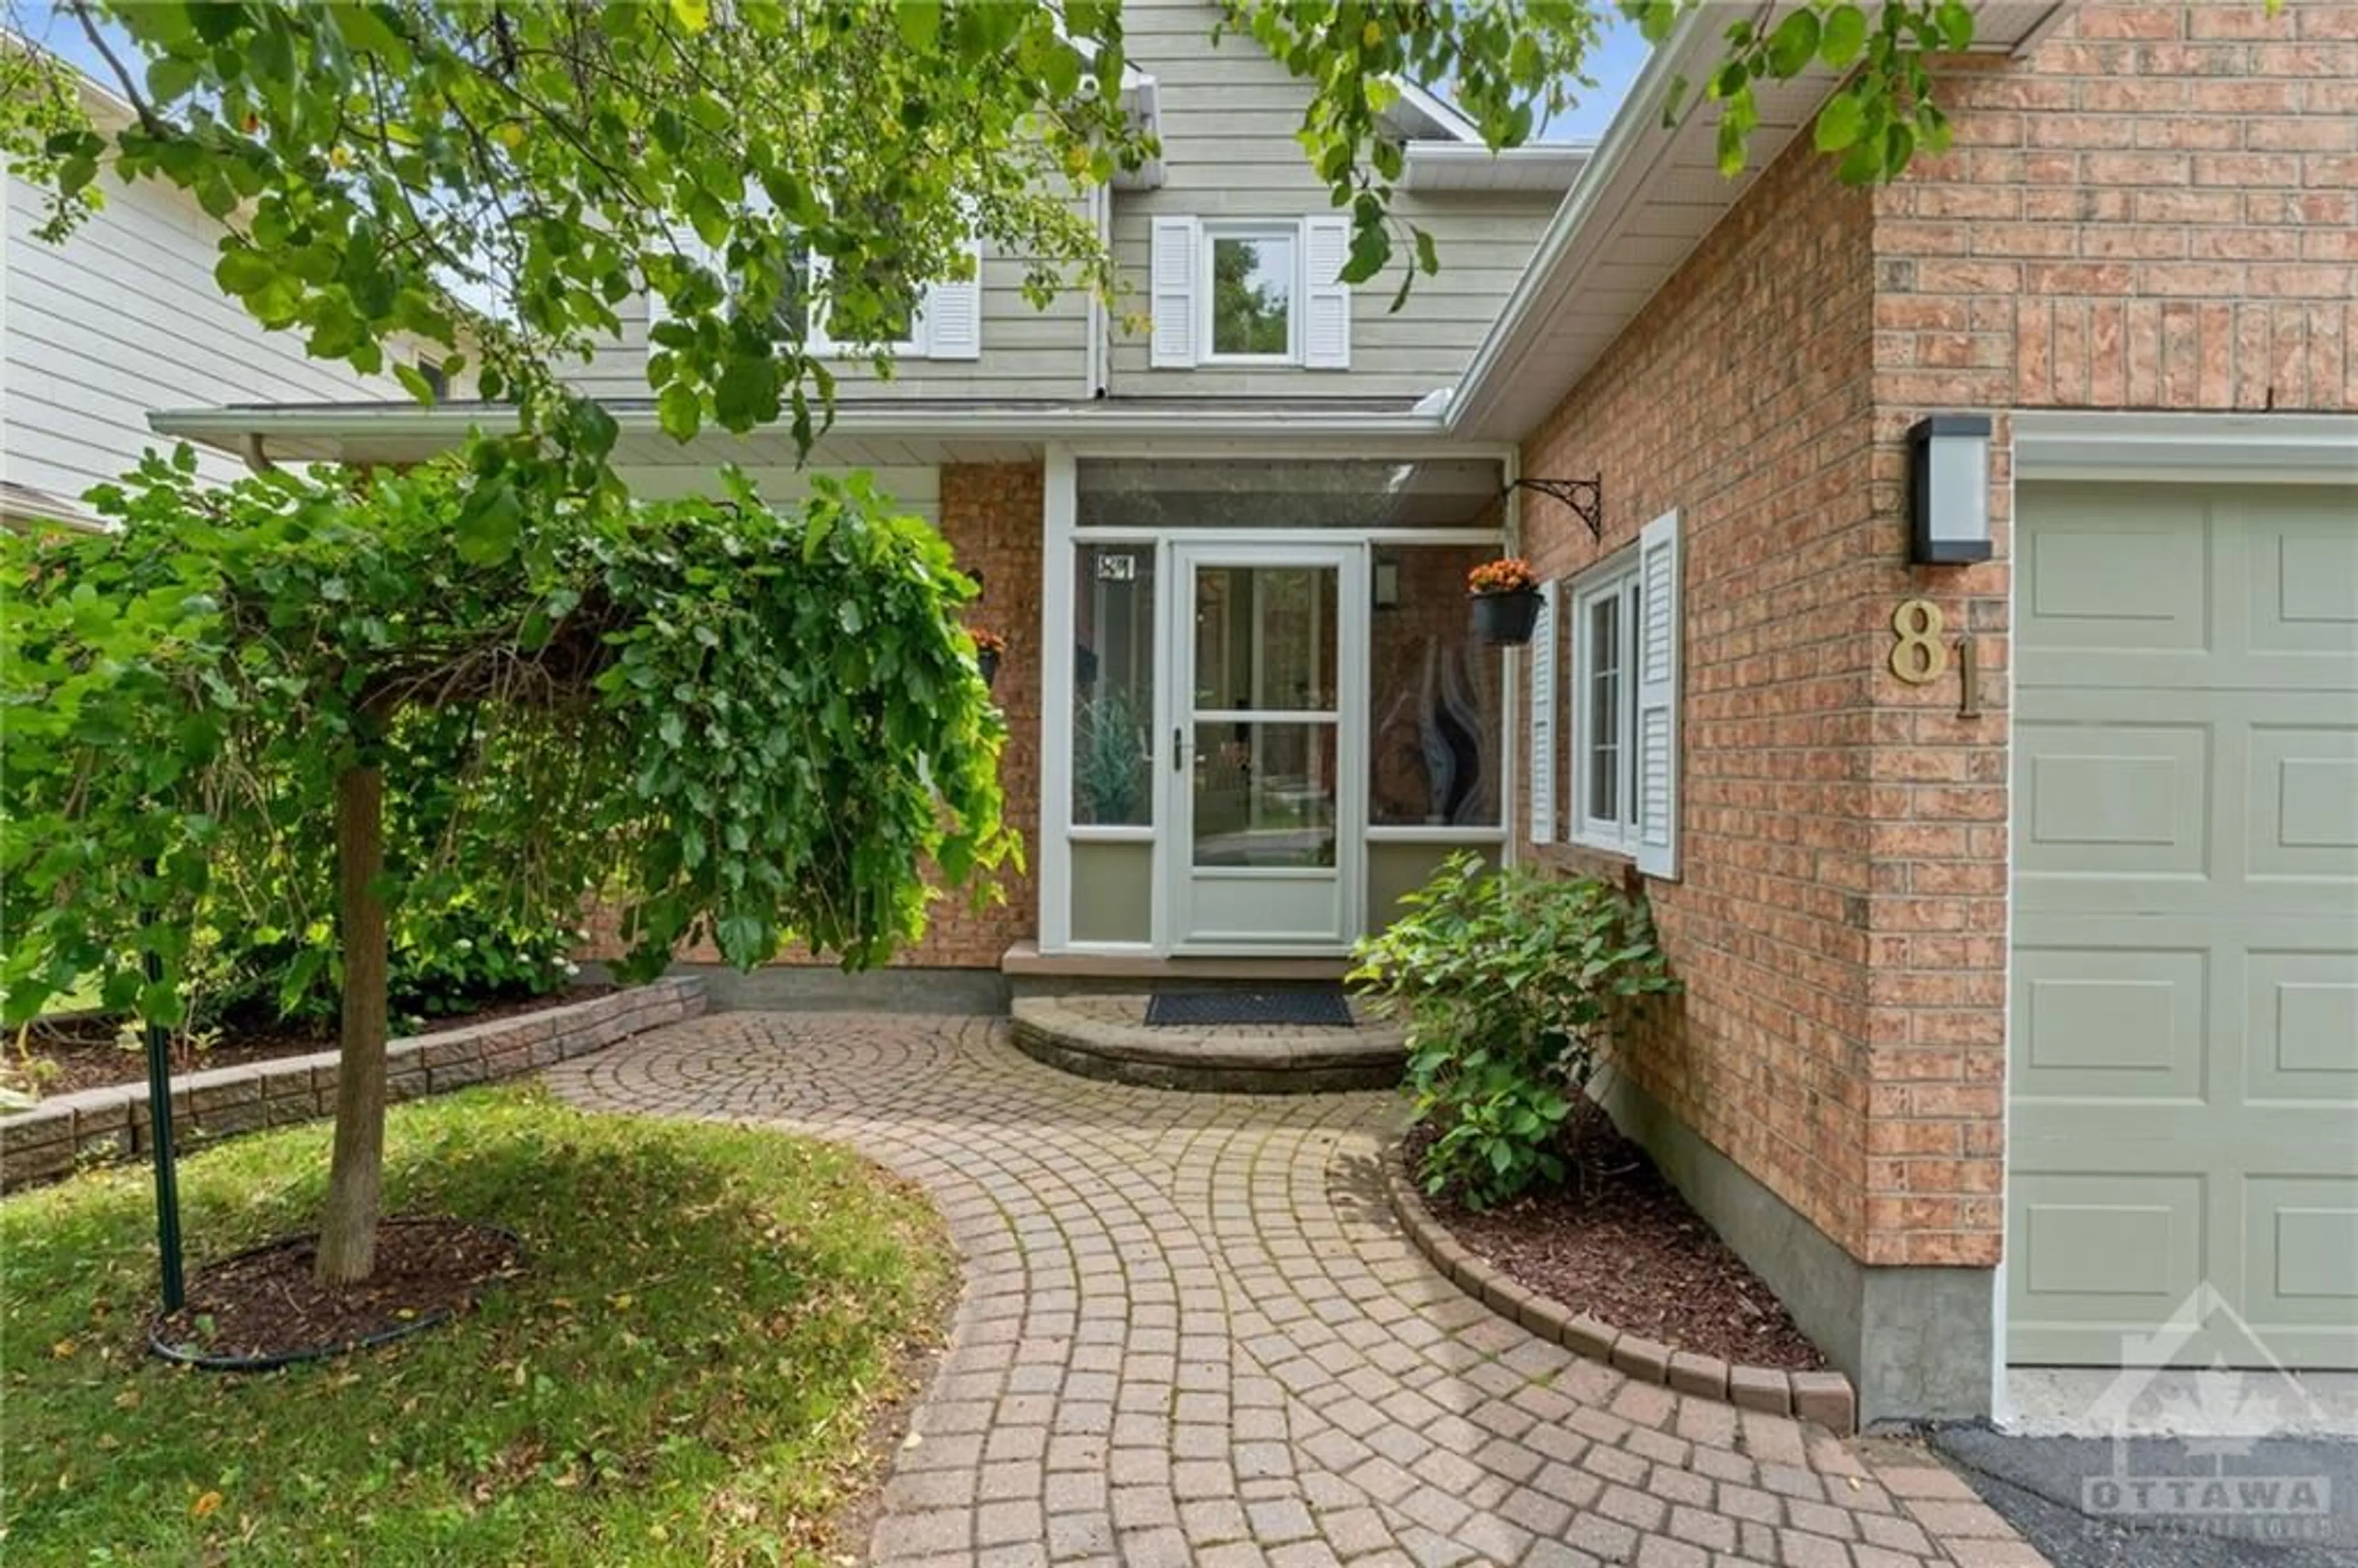 Home with brick exterior material for 81 HANSEN Ave, Kanata Ontario K2K 2L7